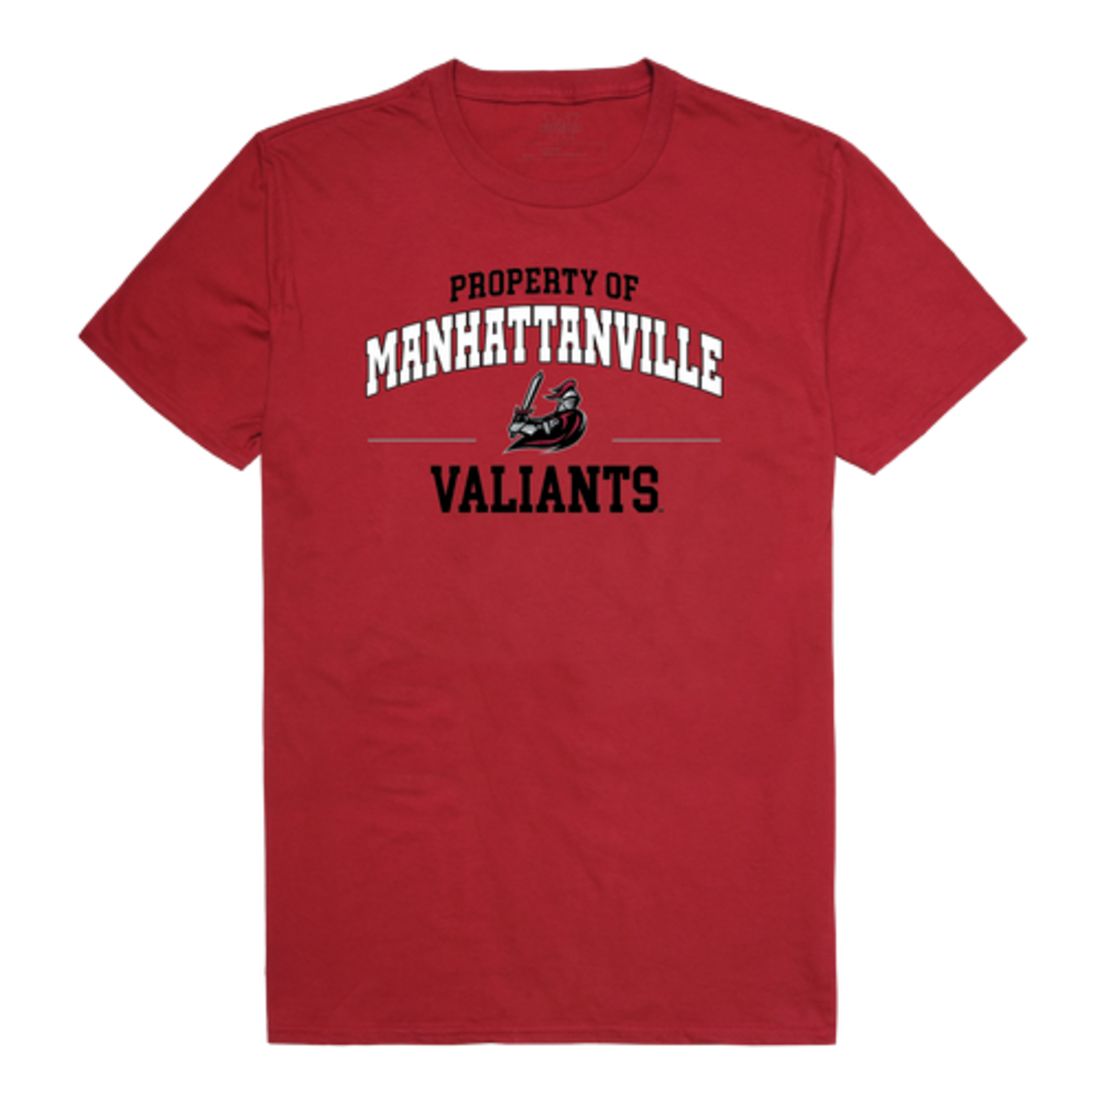 Manhattanville College Valiants Property T-Shirt Tee